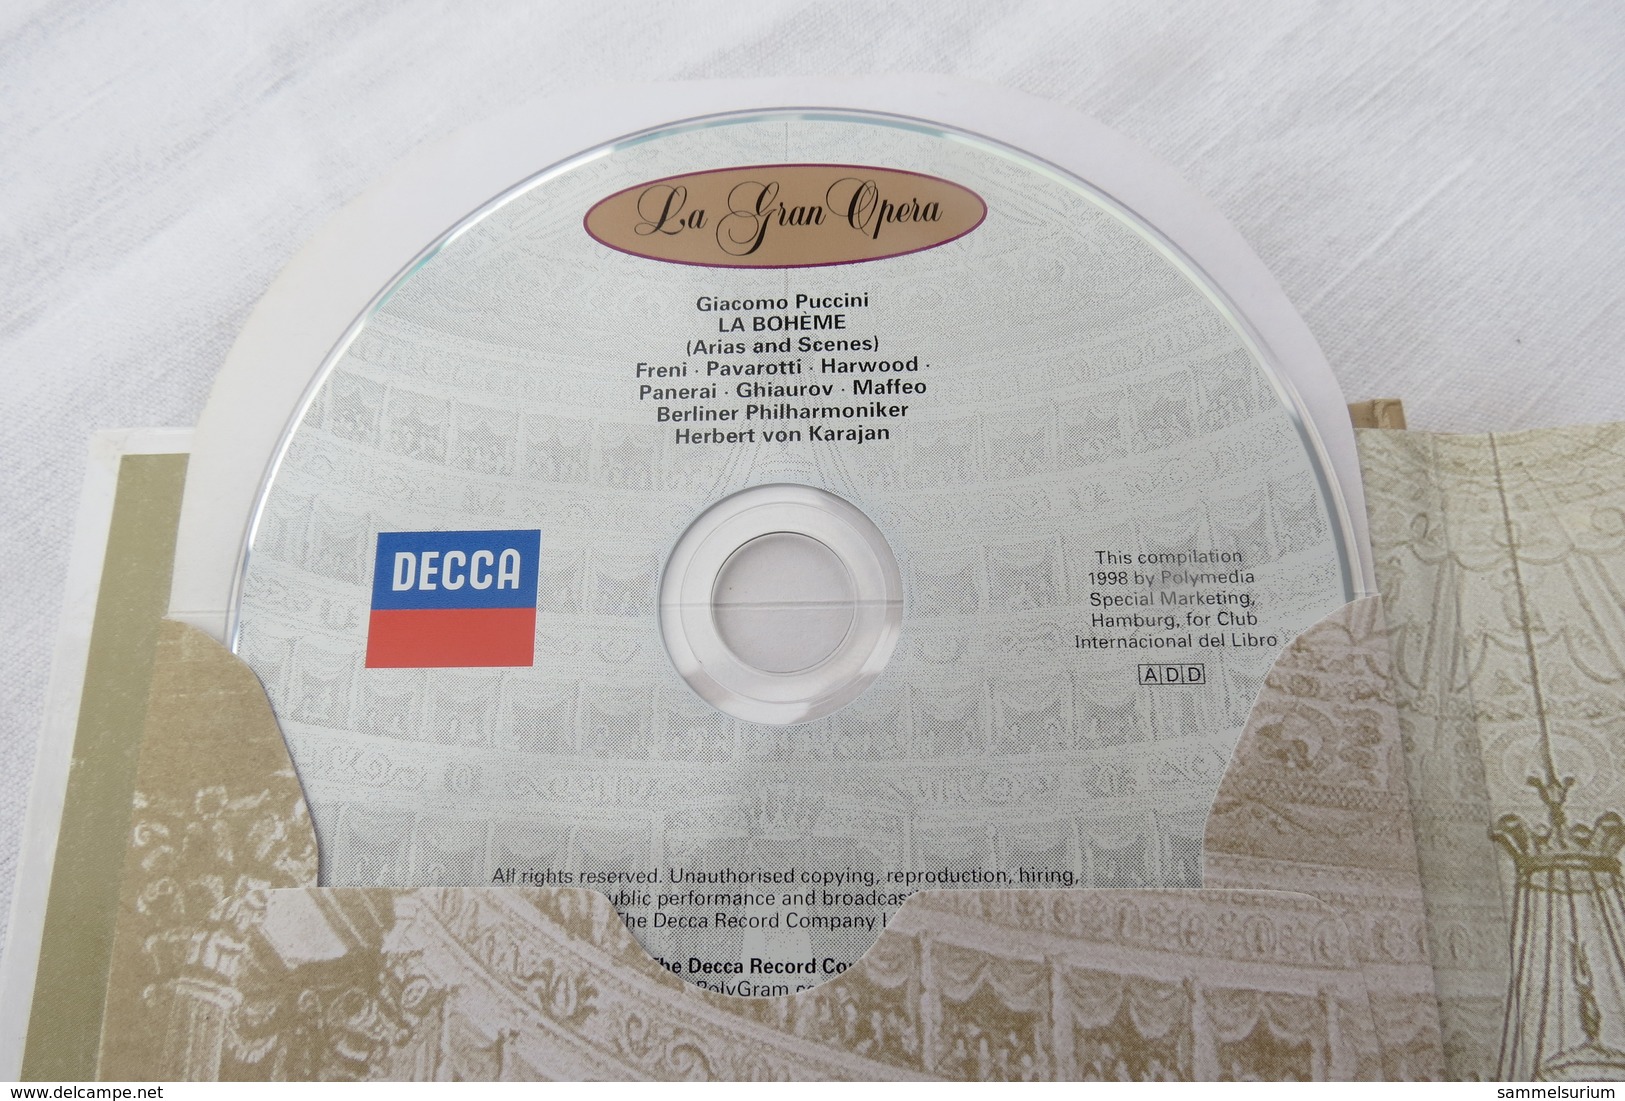 CD "La Bohème / Giacomo Puccini" Mit Buch Aus Der CD Book Collection (gepflegter Zustand) - Opera / Operette